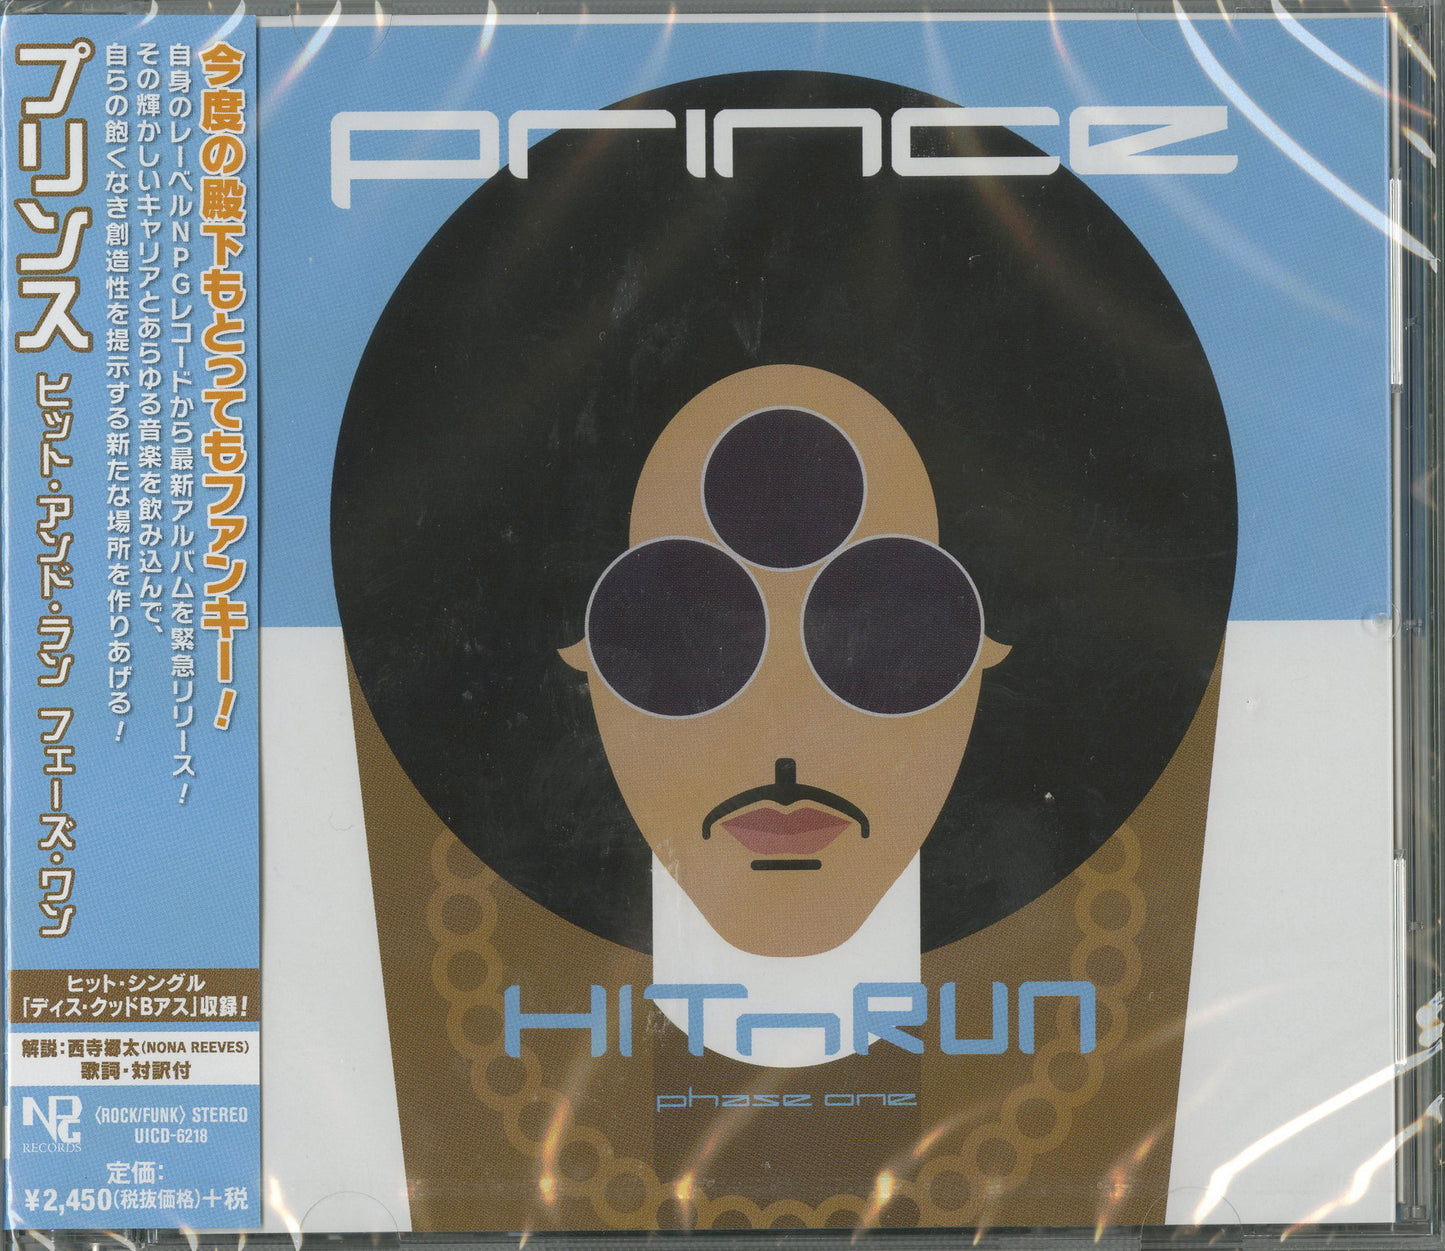 Prince - Hitnrun Phase One - Japan CD